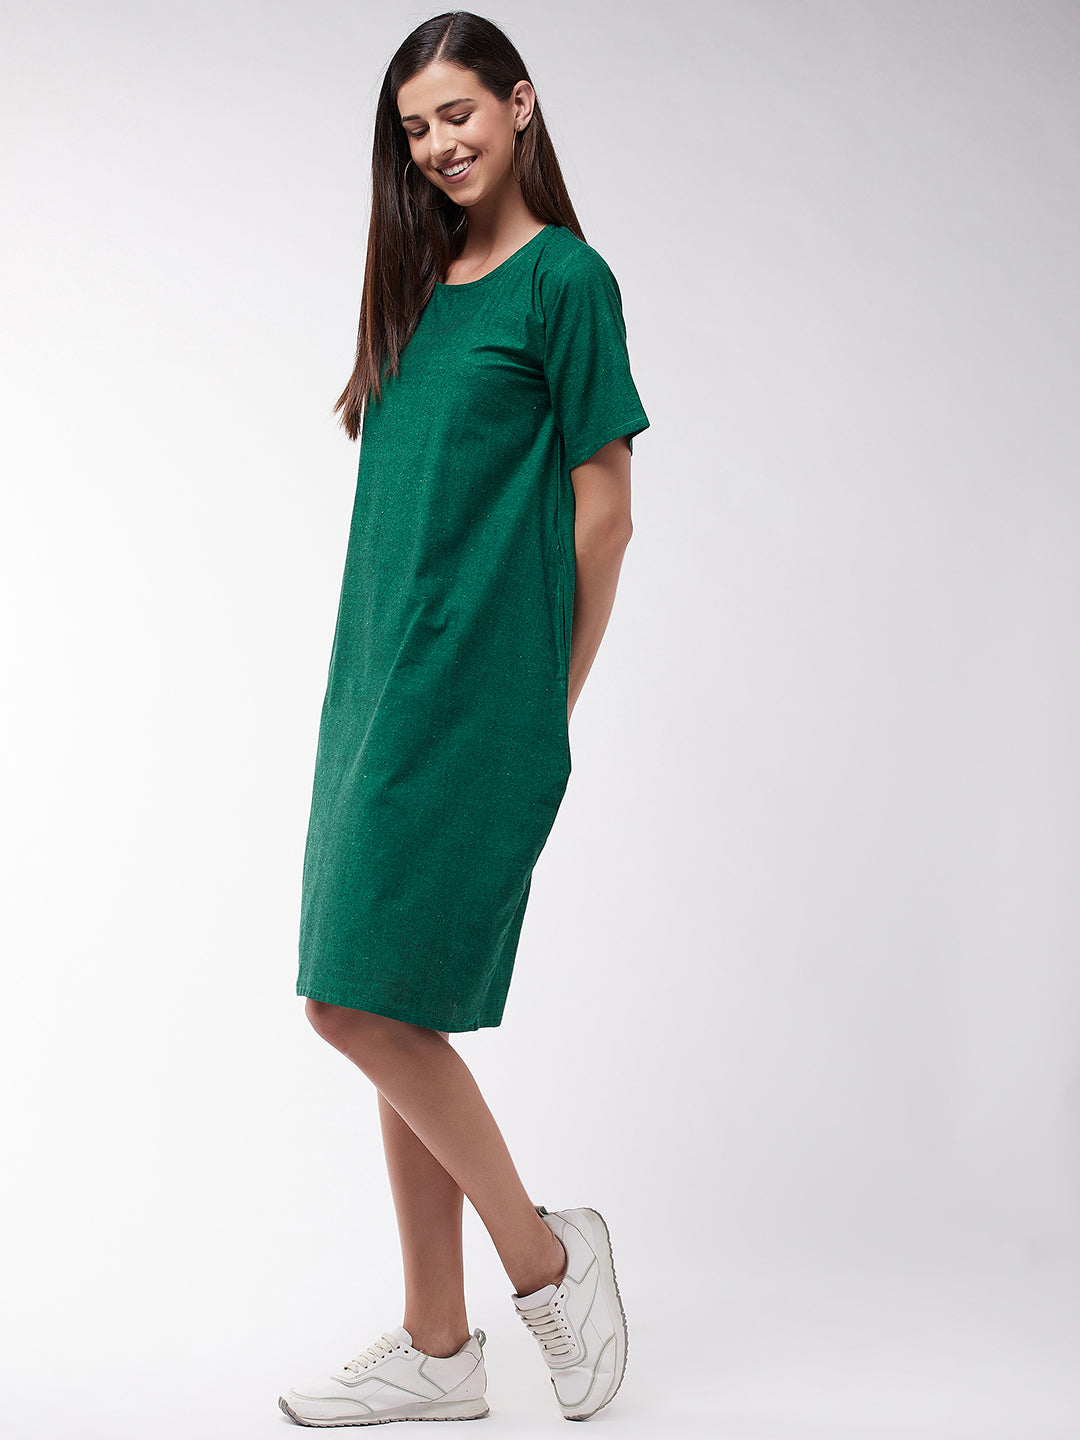 Green Chambray Dress